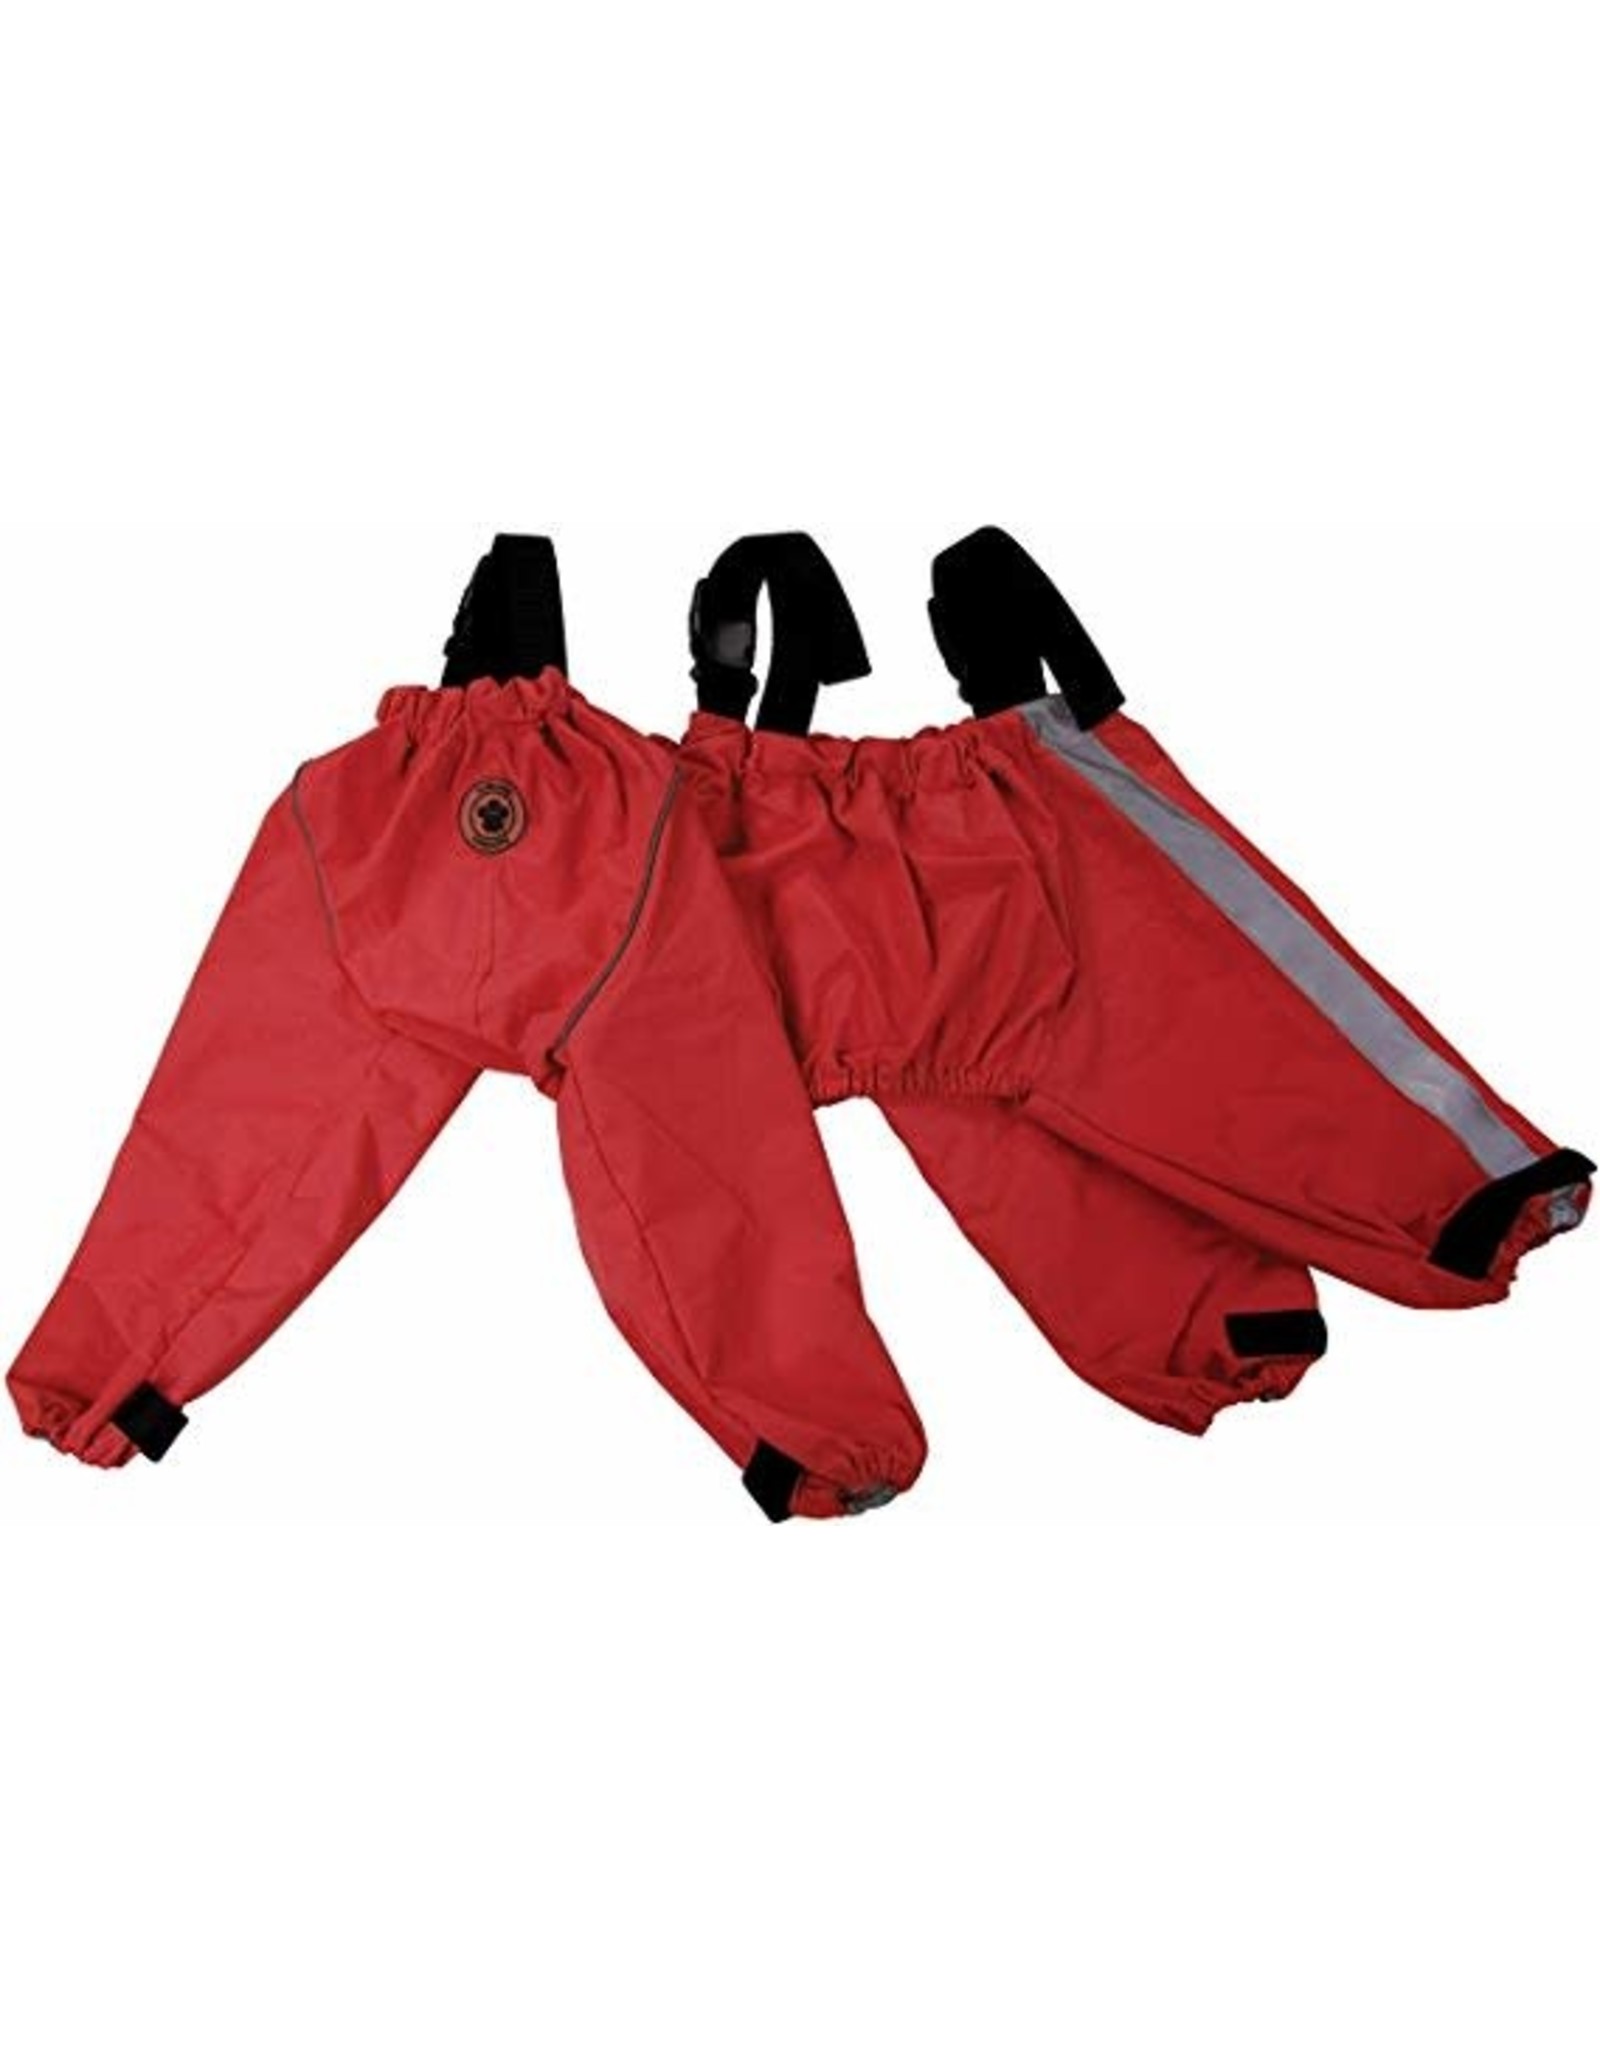 foufoudog FFD bodyguard pantalon protection rouge